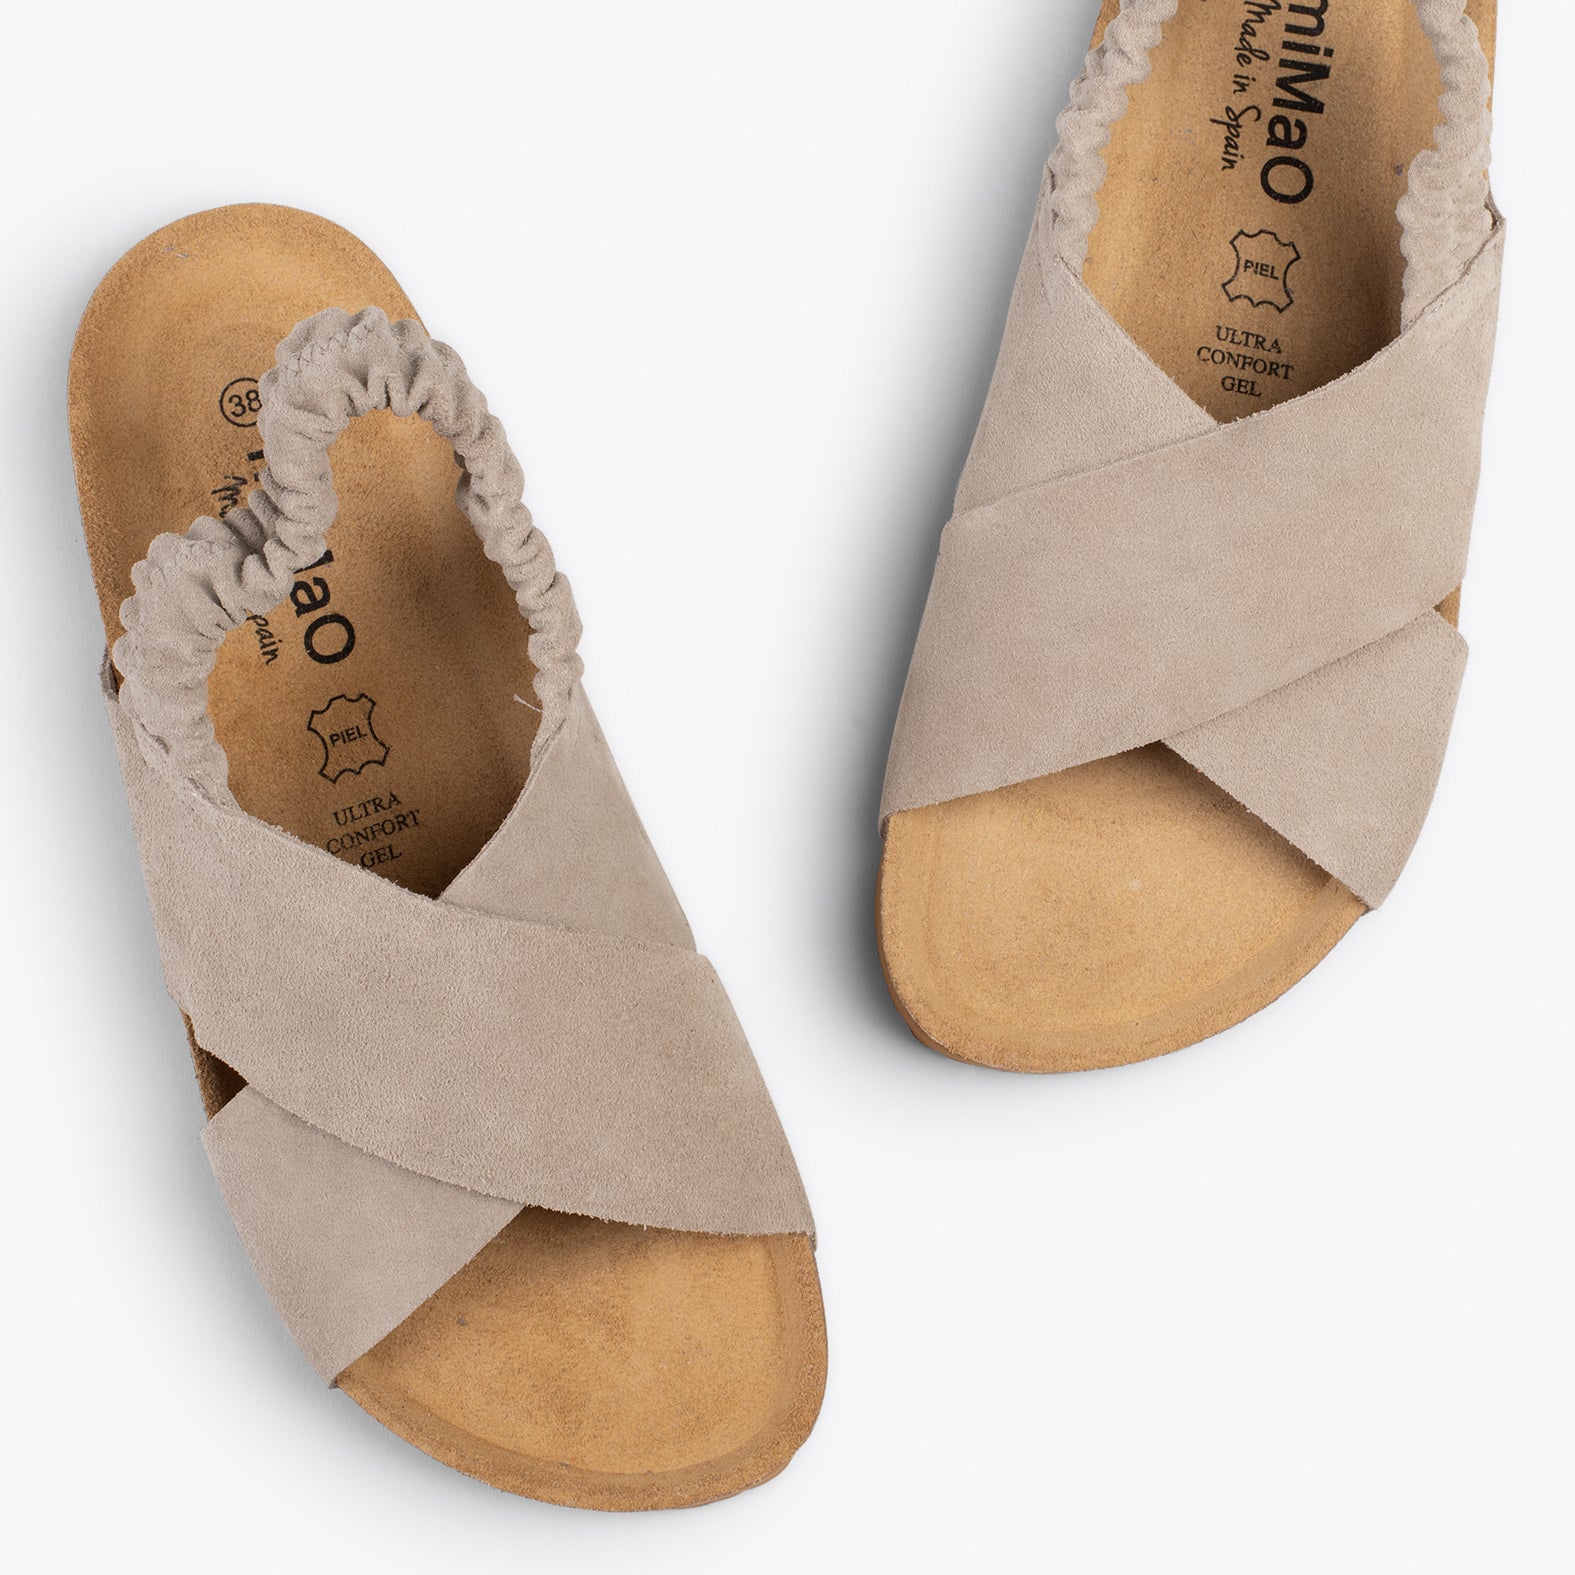 PALMERA – TAUPE bio sandal with elastic band